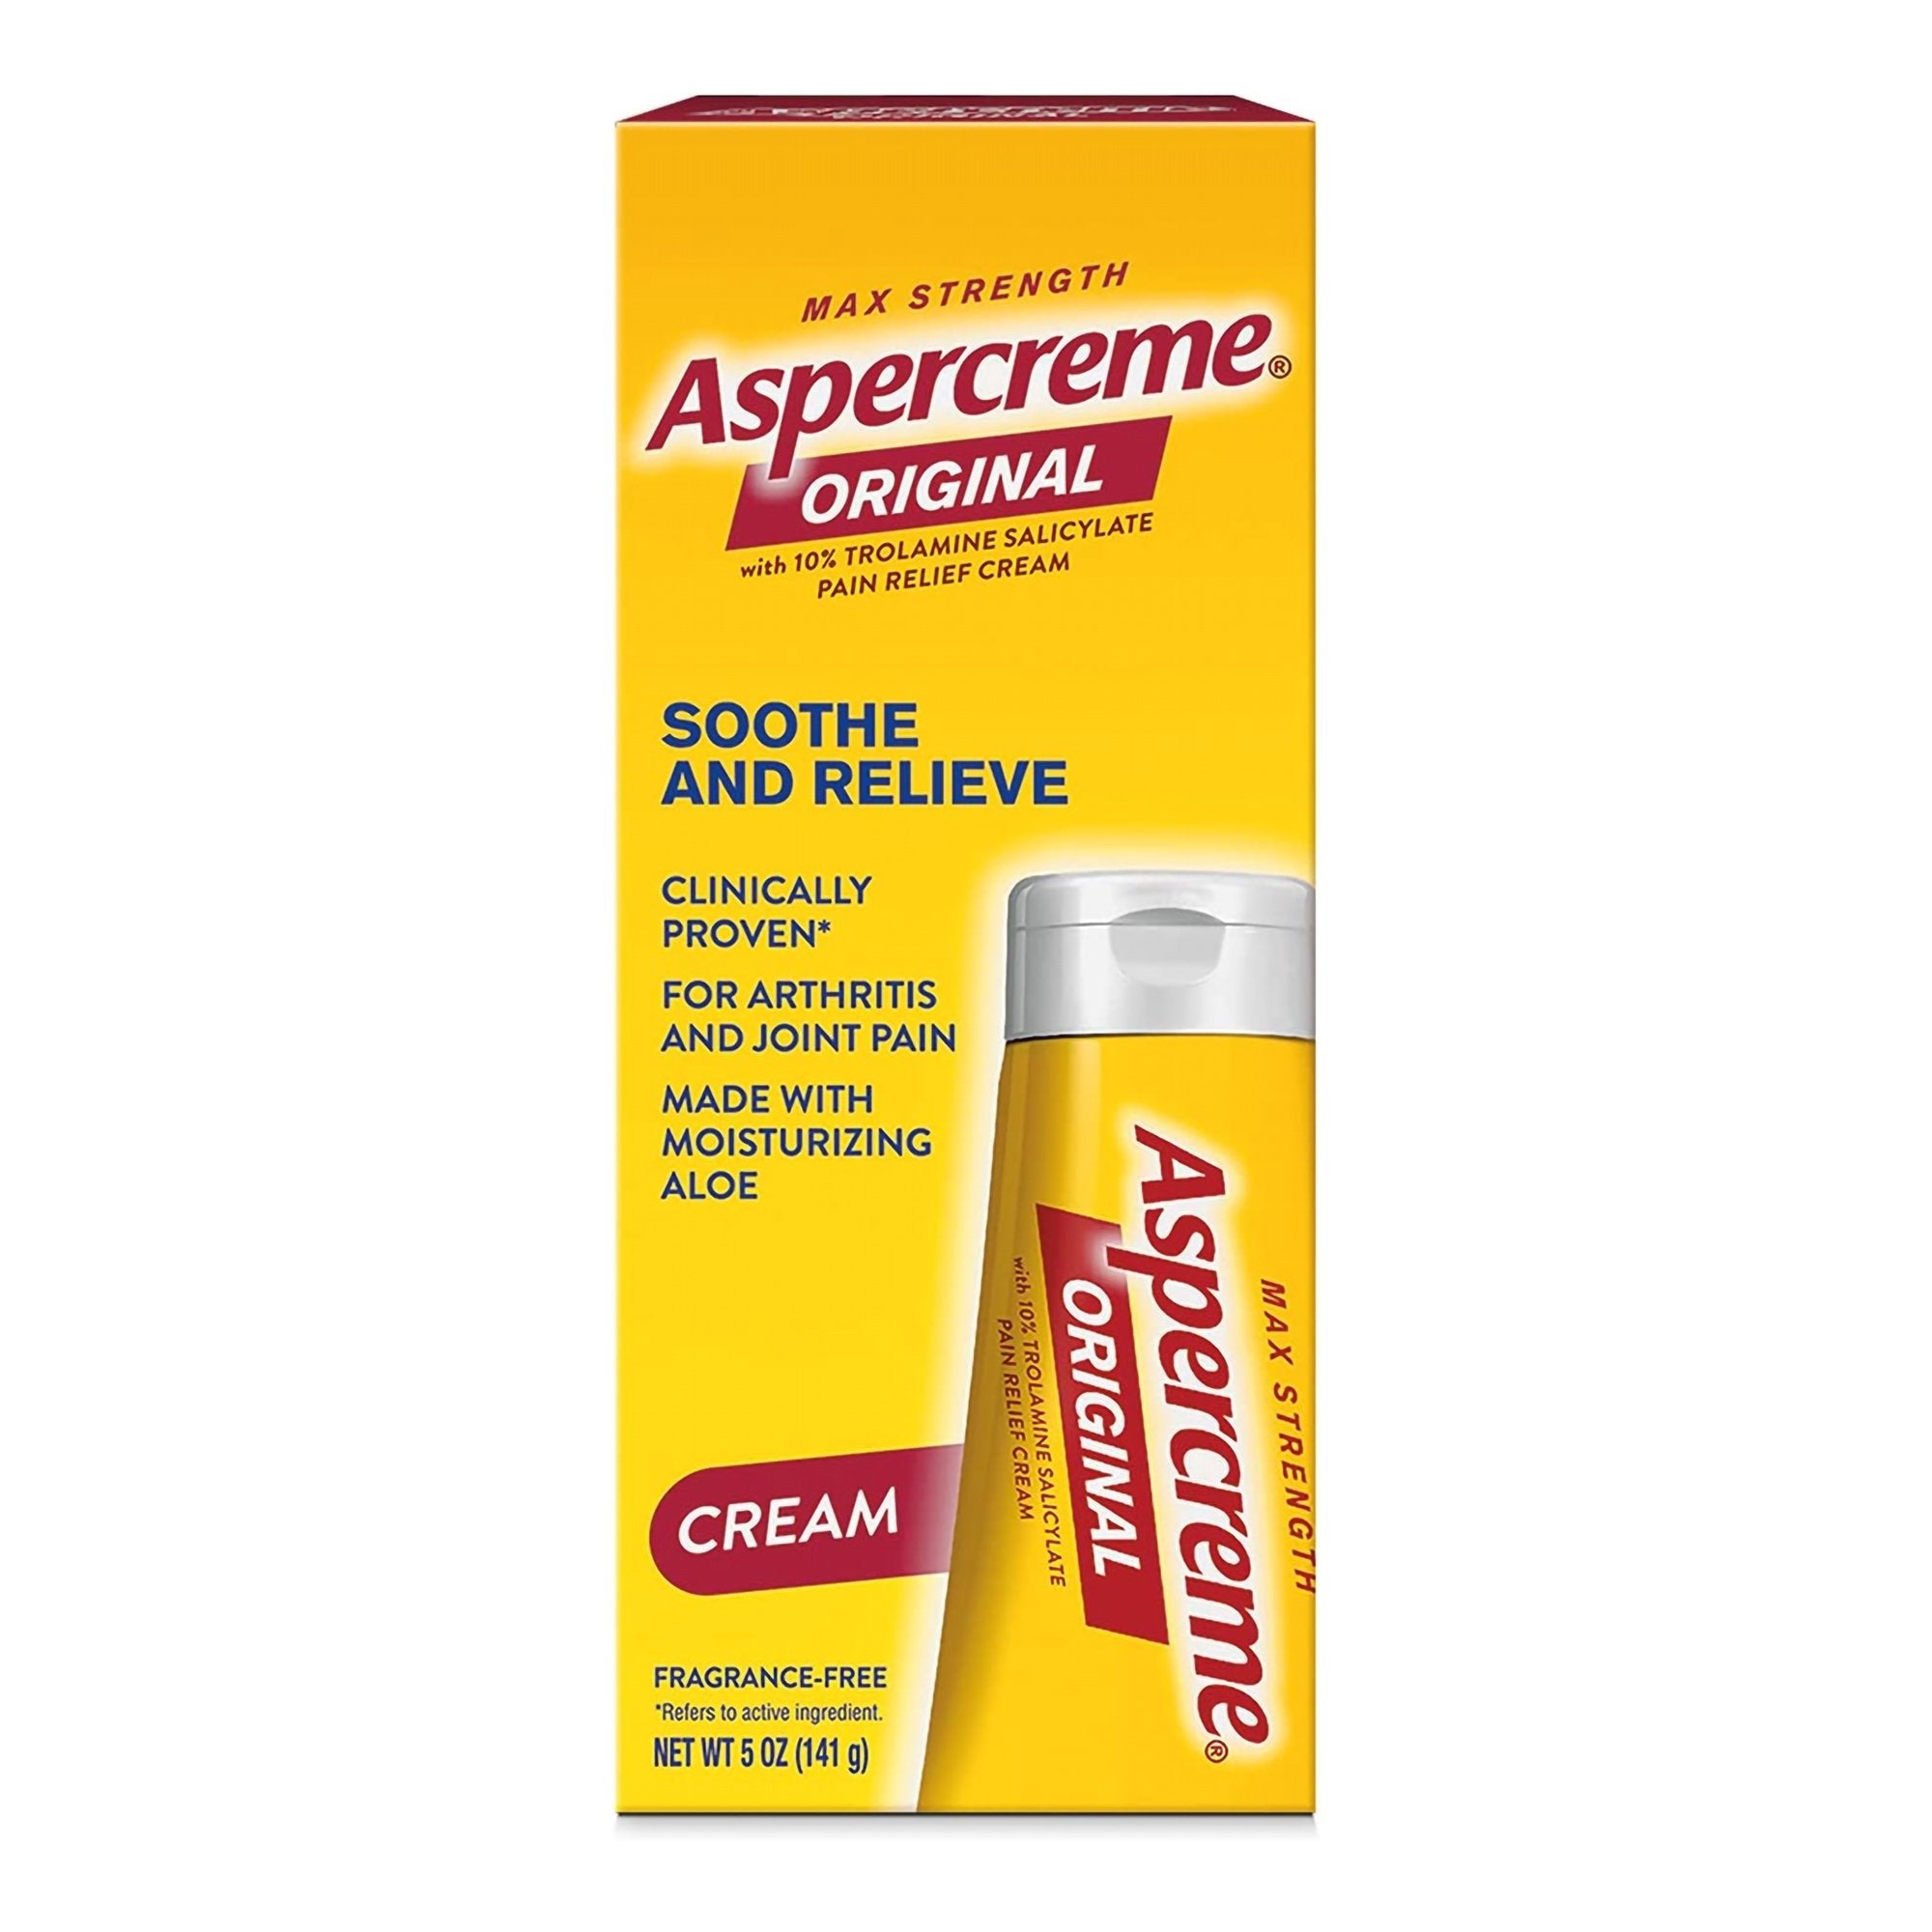 Topical Pain Relief Aspercreme® Max Strength 10% Strength Trolamine Salicylate Cream 5 oz.